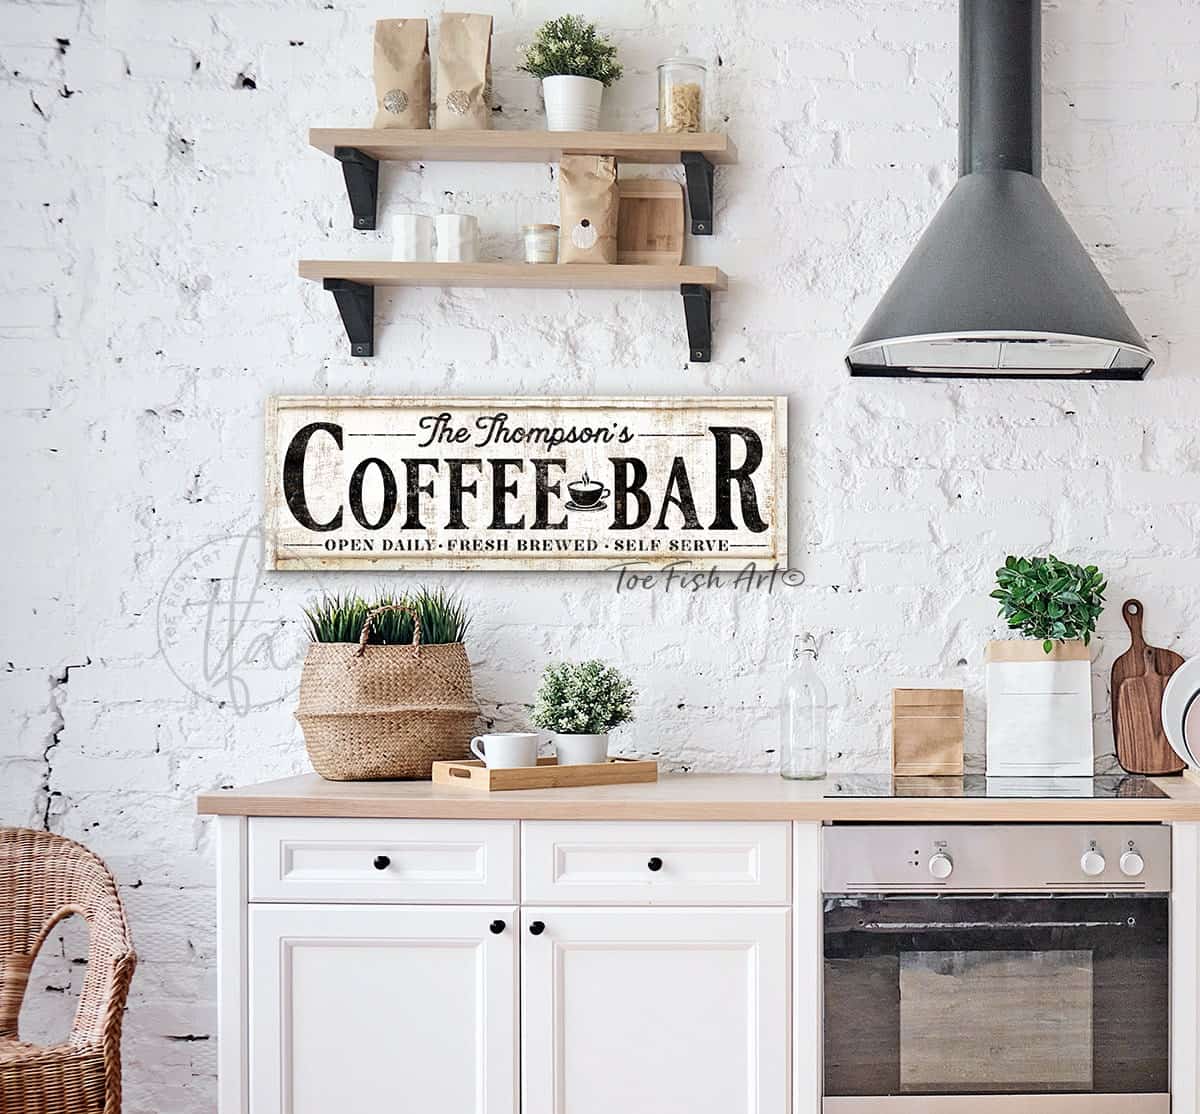 Create Your Own Self-Serve Coffee Bar